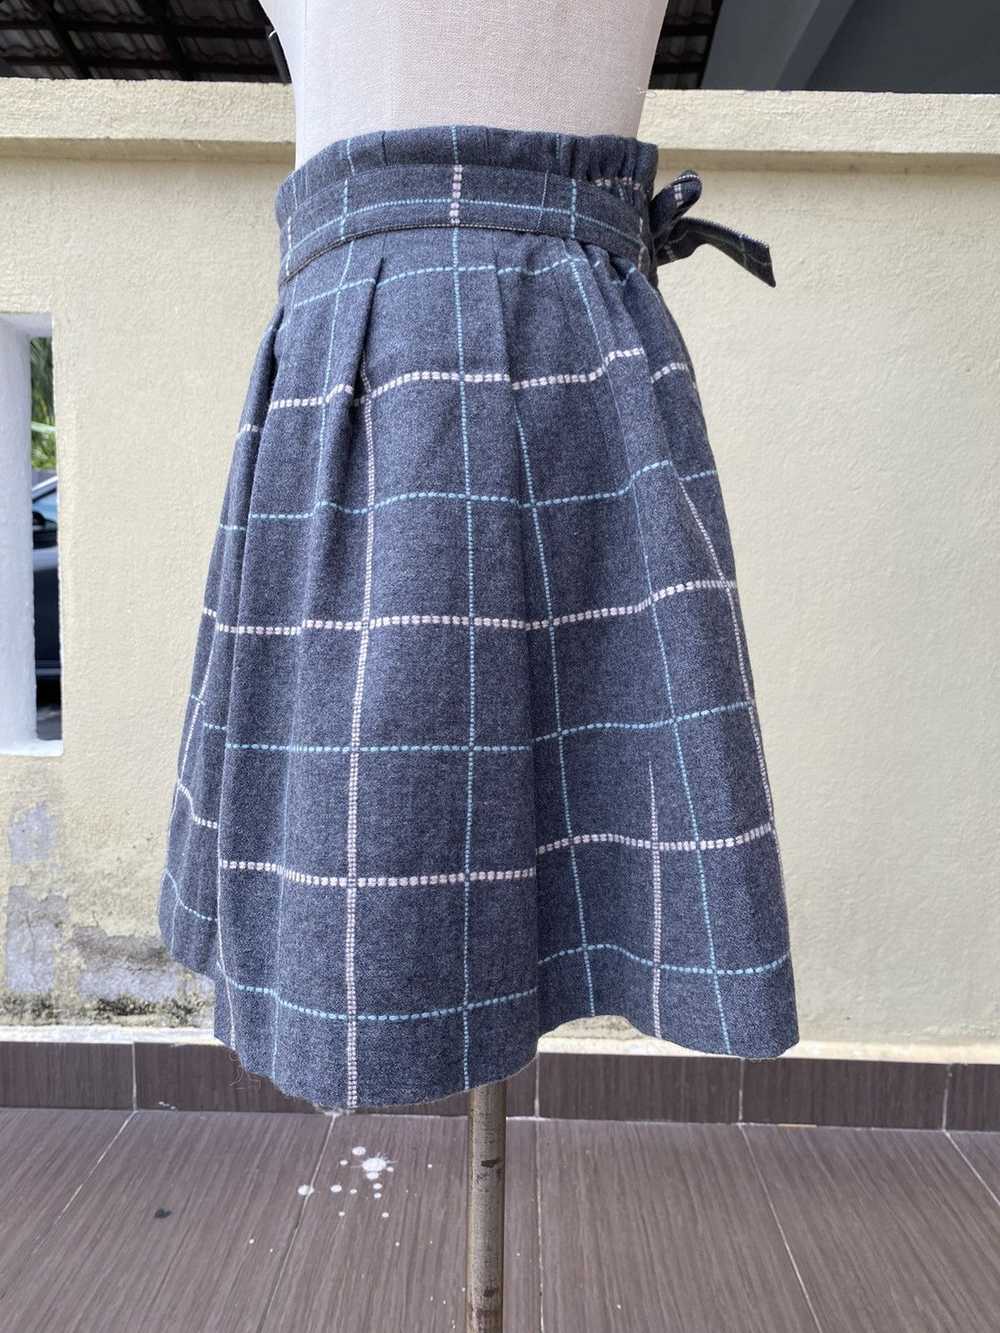 Agnes B. wool skirt - image 2